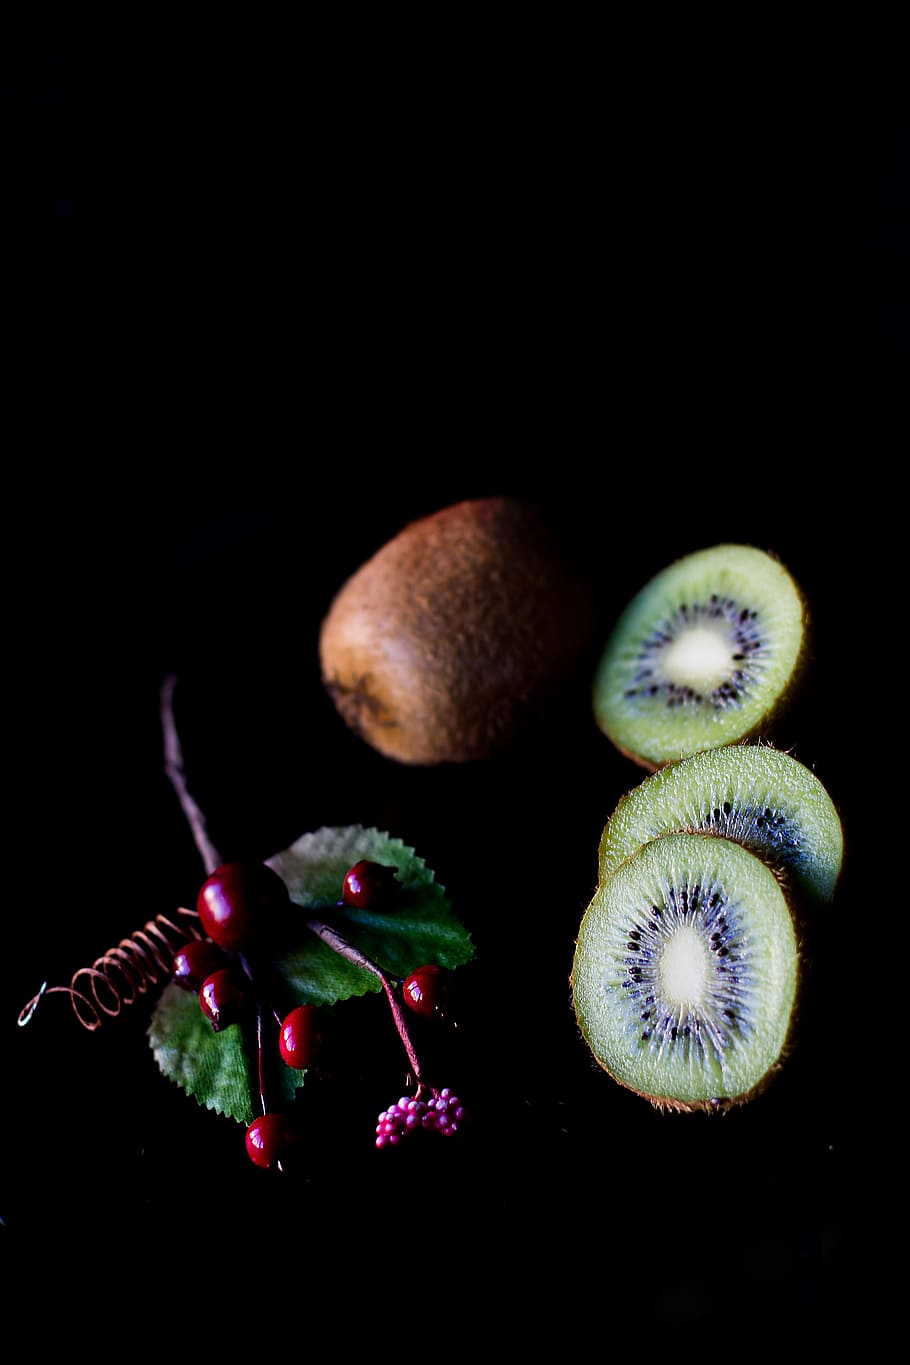 kiwi yang indah, menutup, gelap, buah, hijau, sehat, kiwi, minimalis, sederhana, kesegaran